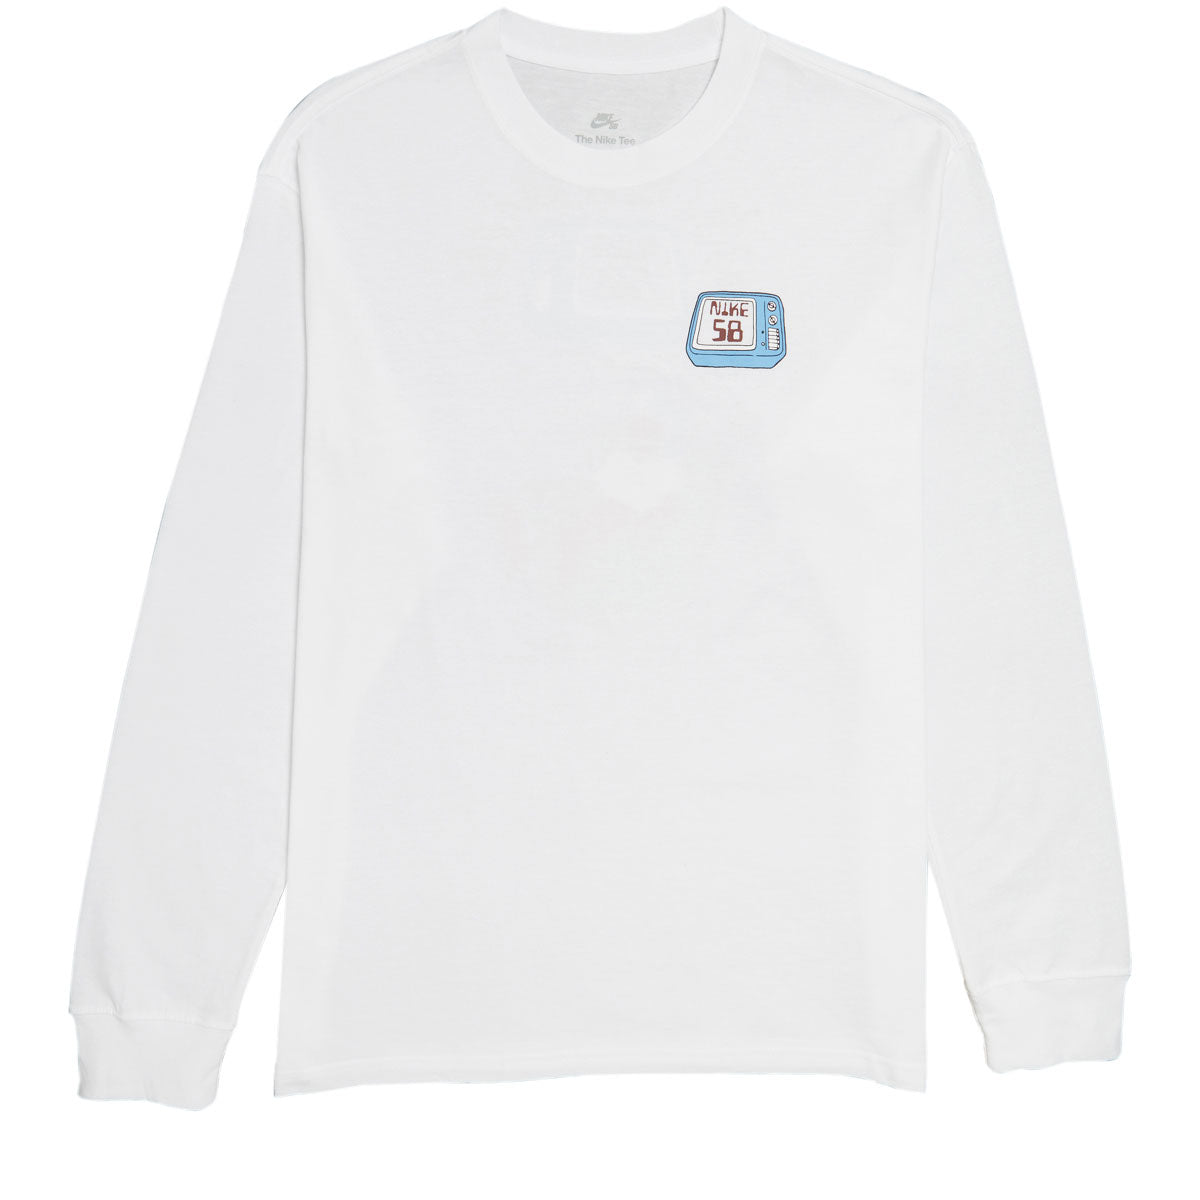 Nike SB TV Long Sleeve T-Shirt - White image 5